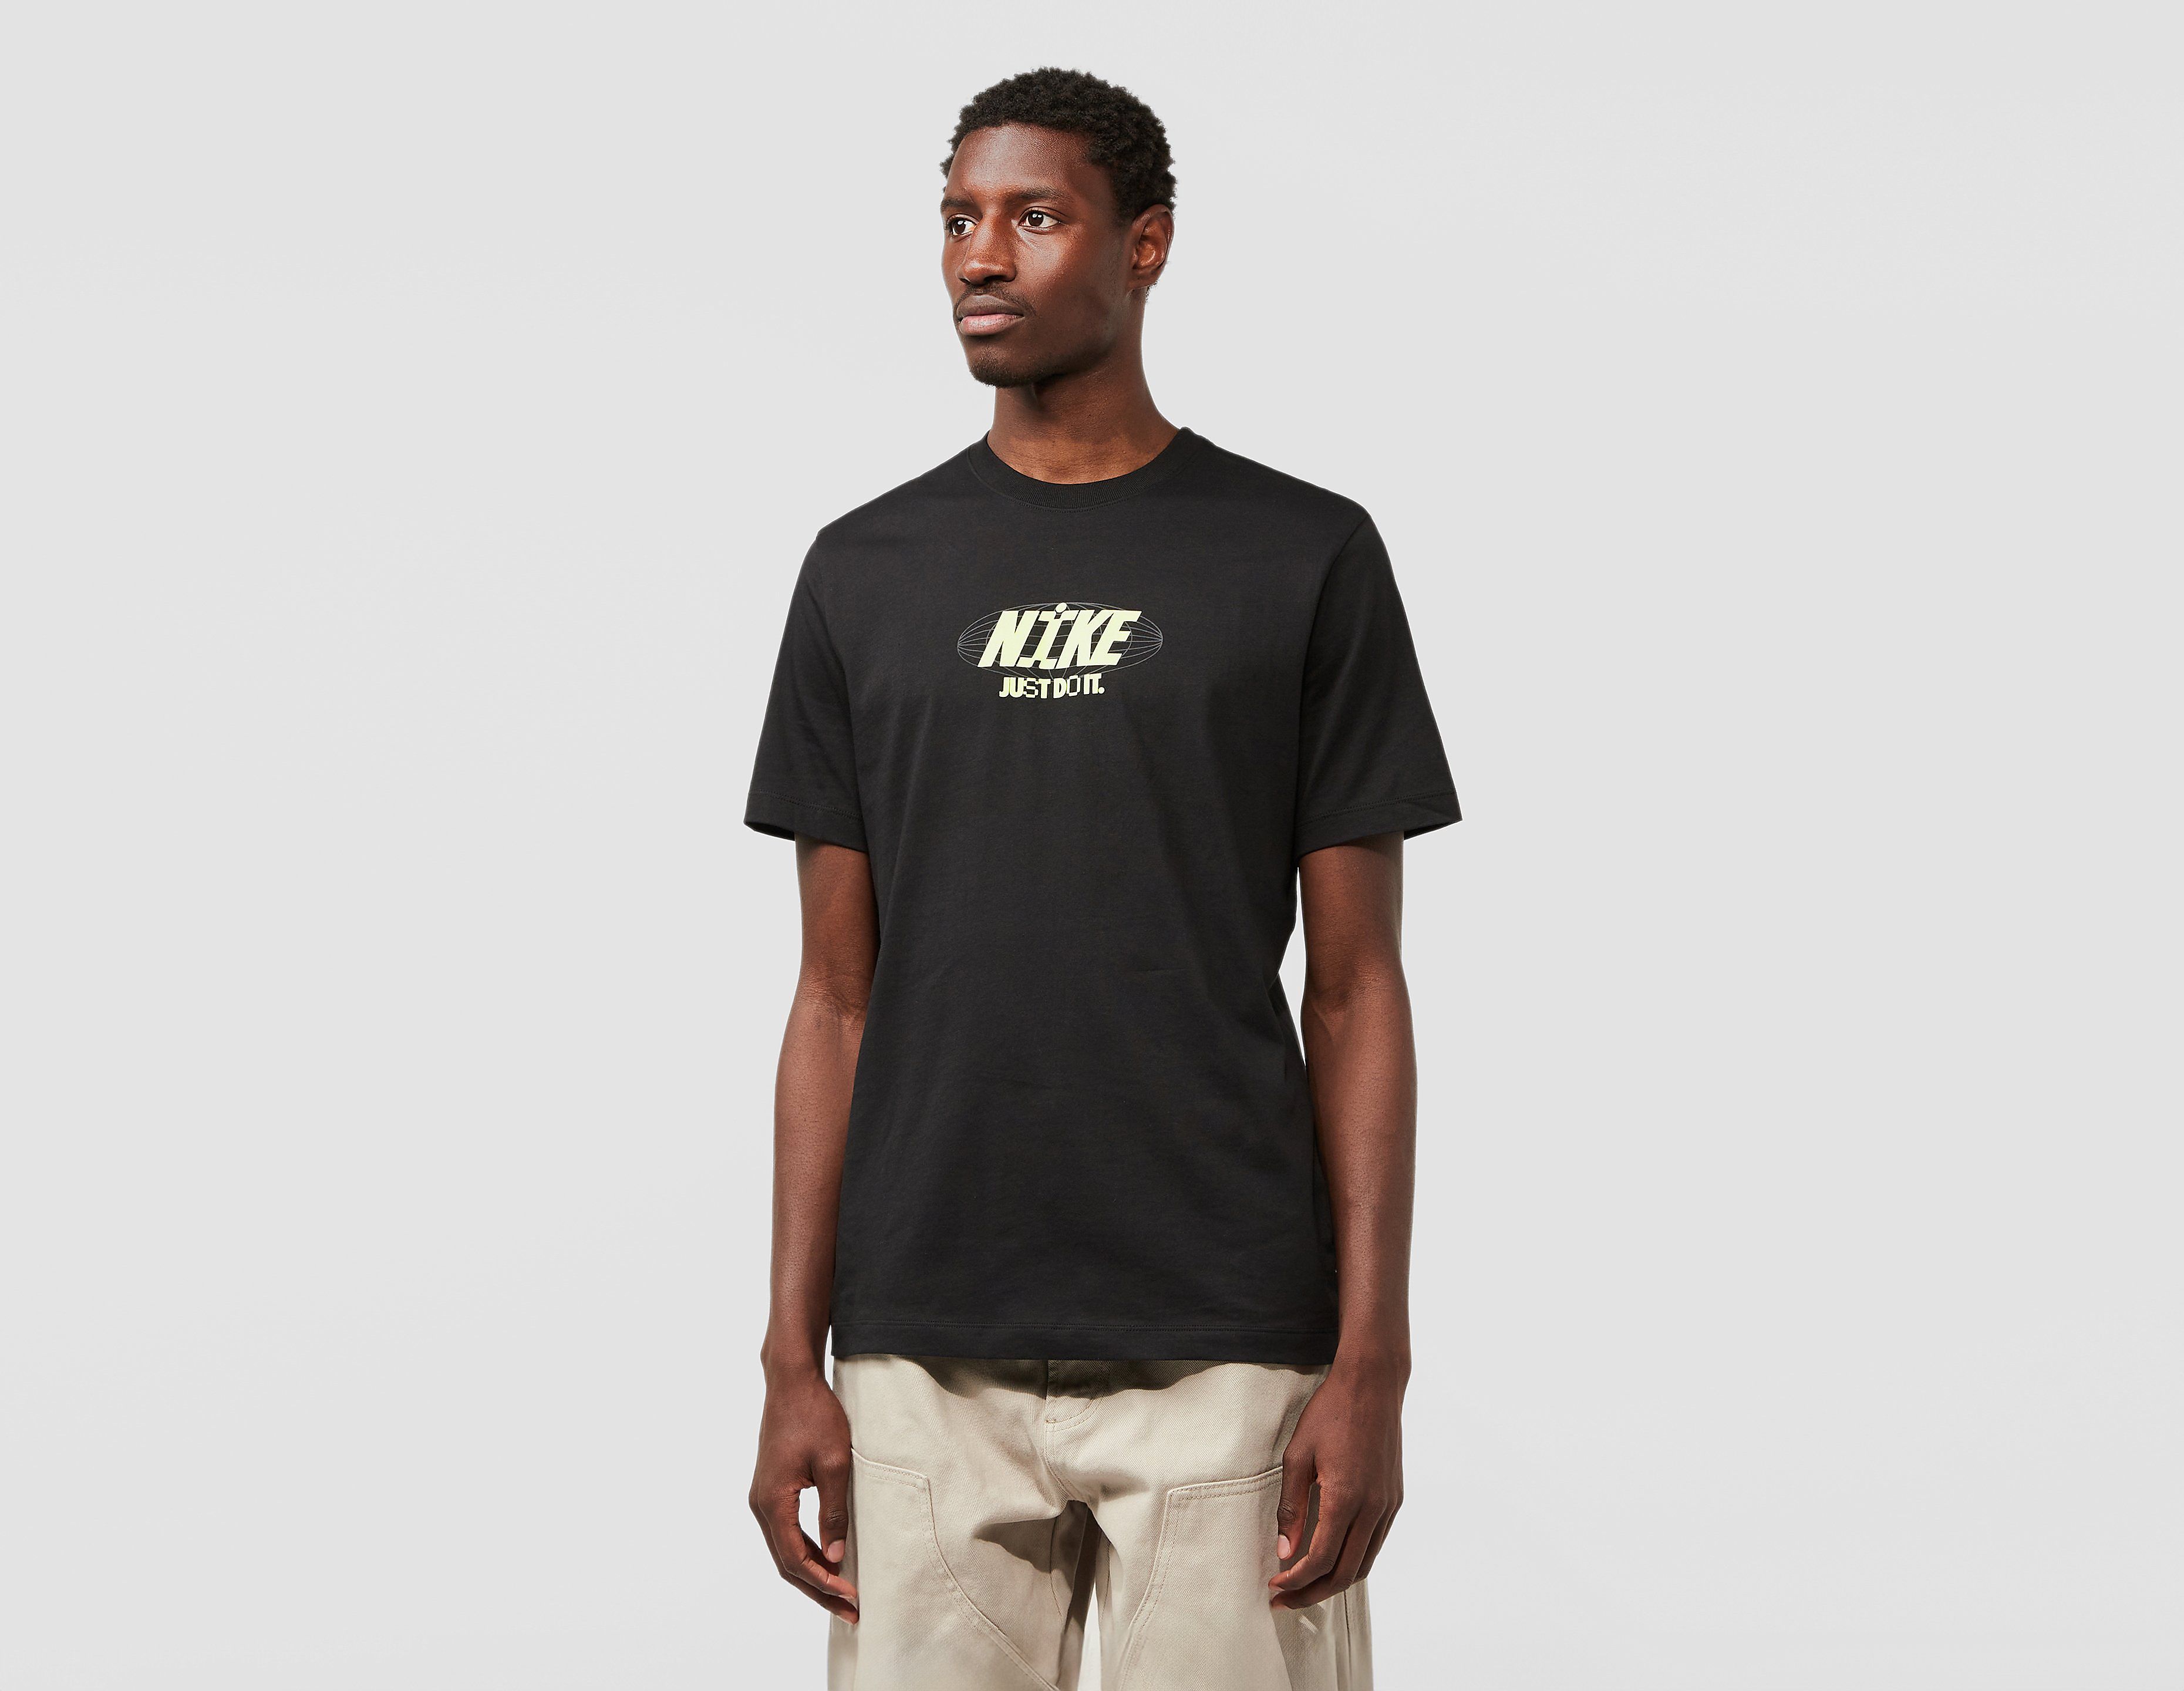 Nike Just Do It Dance T-Shirt, Black